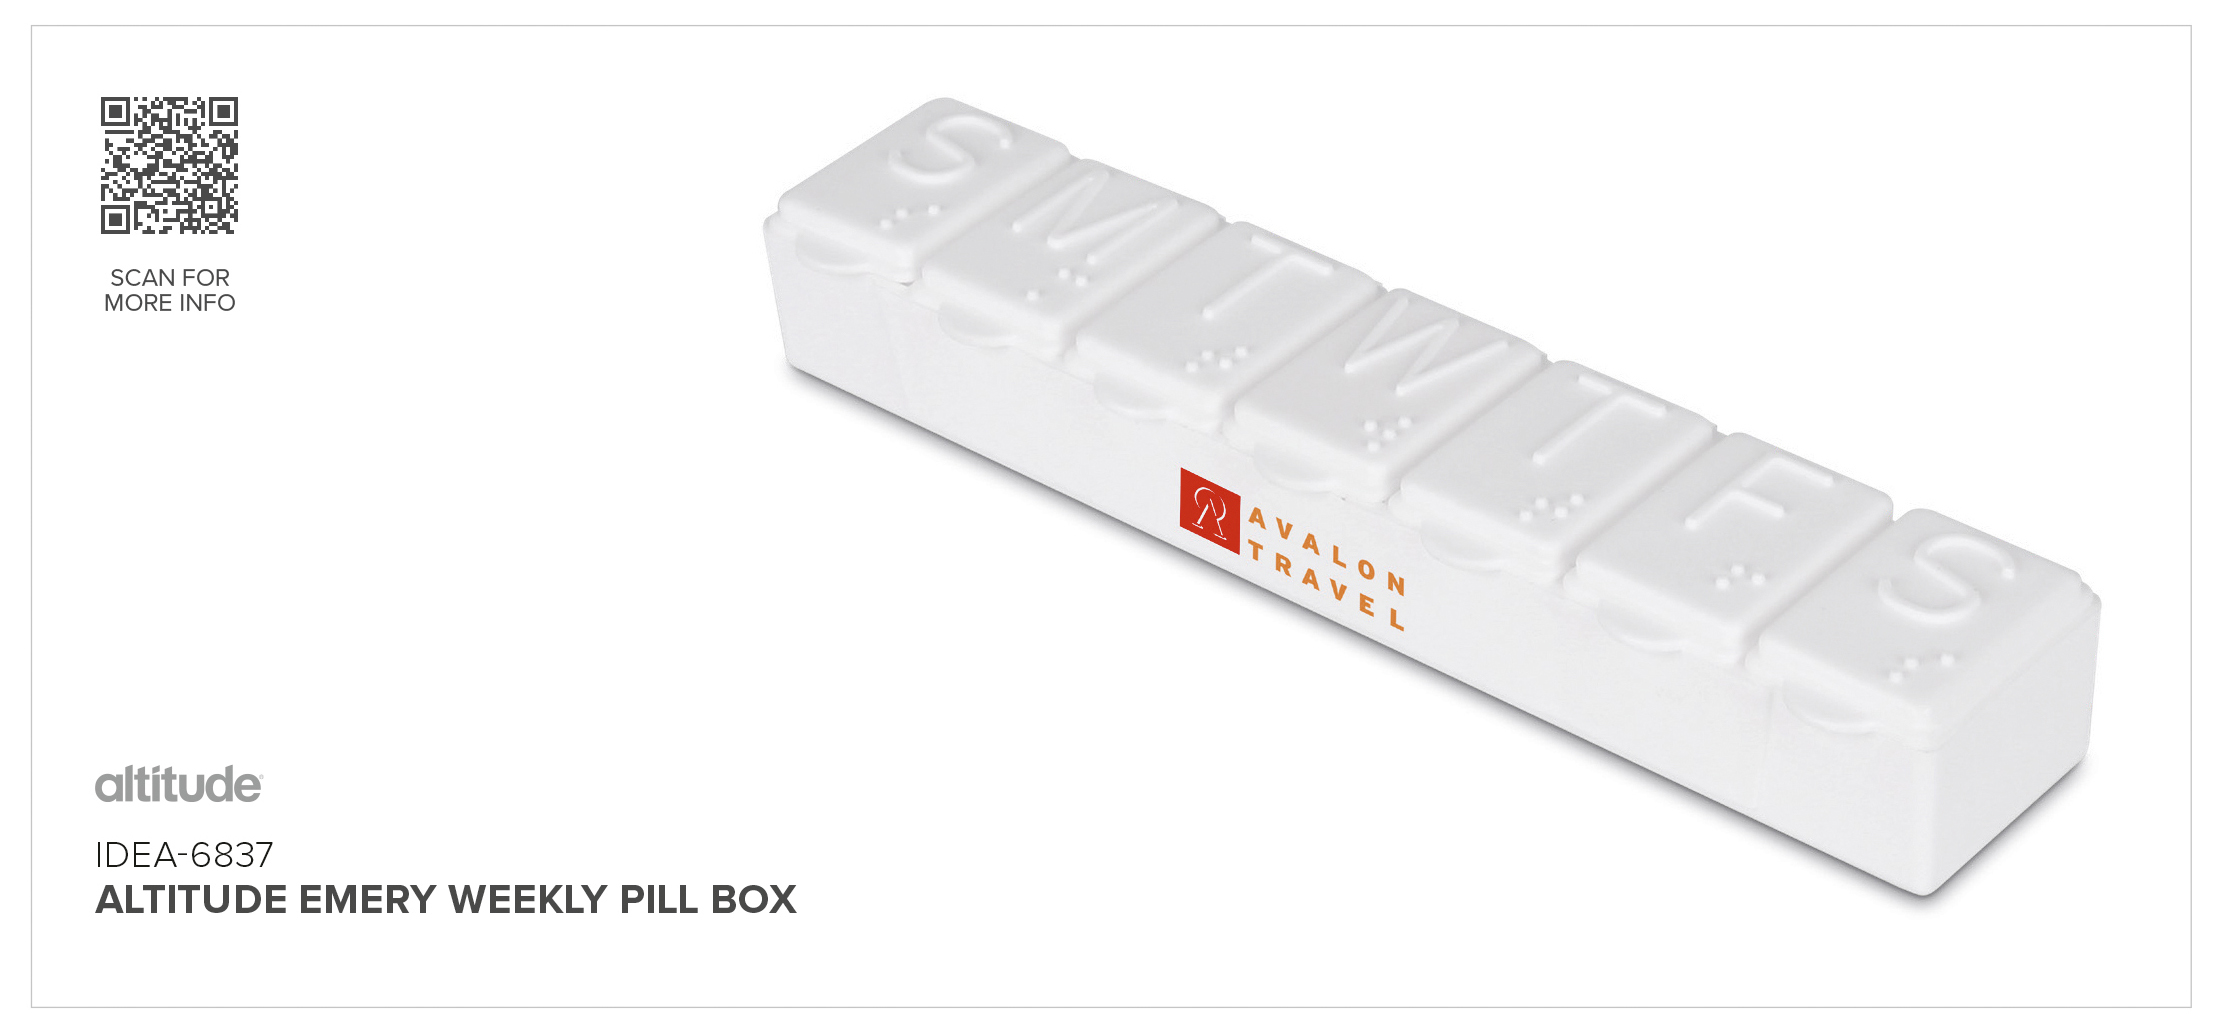 Altitude Emery Weekly Pill Box